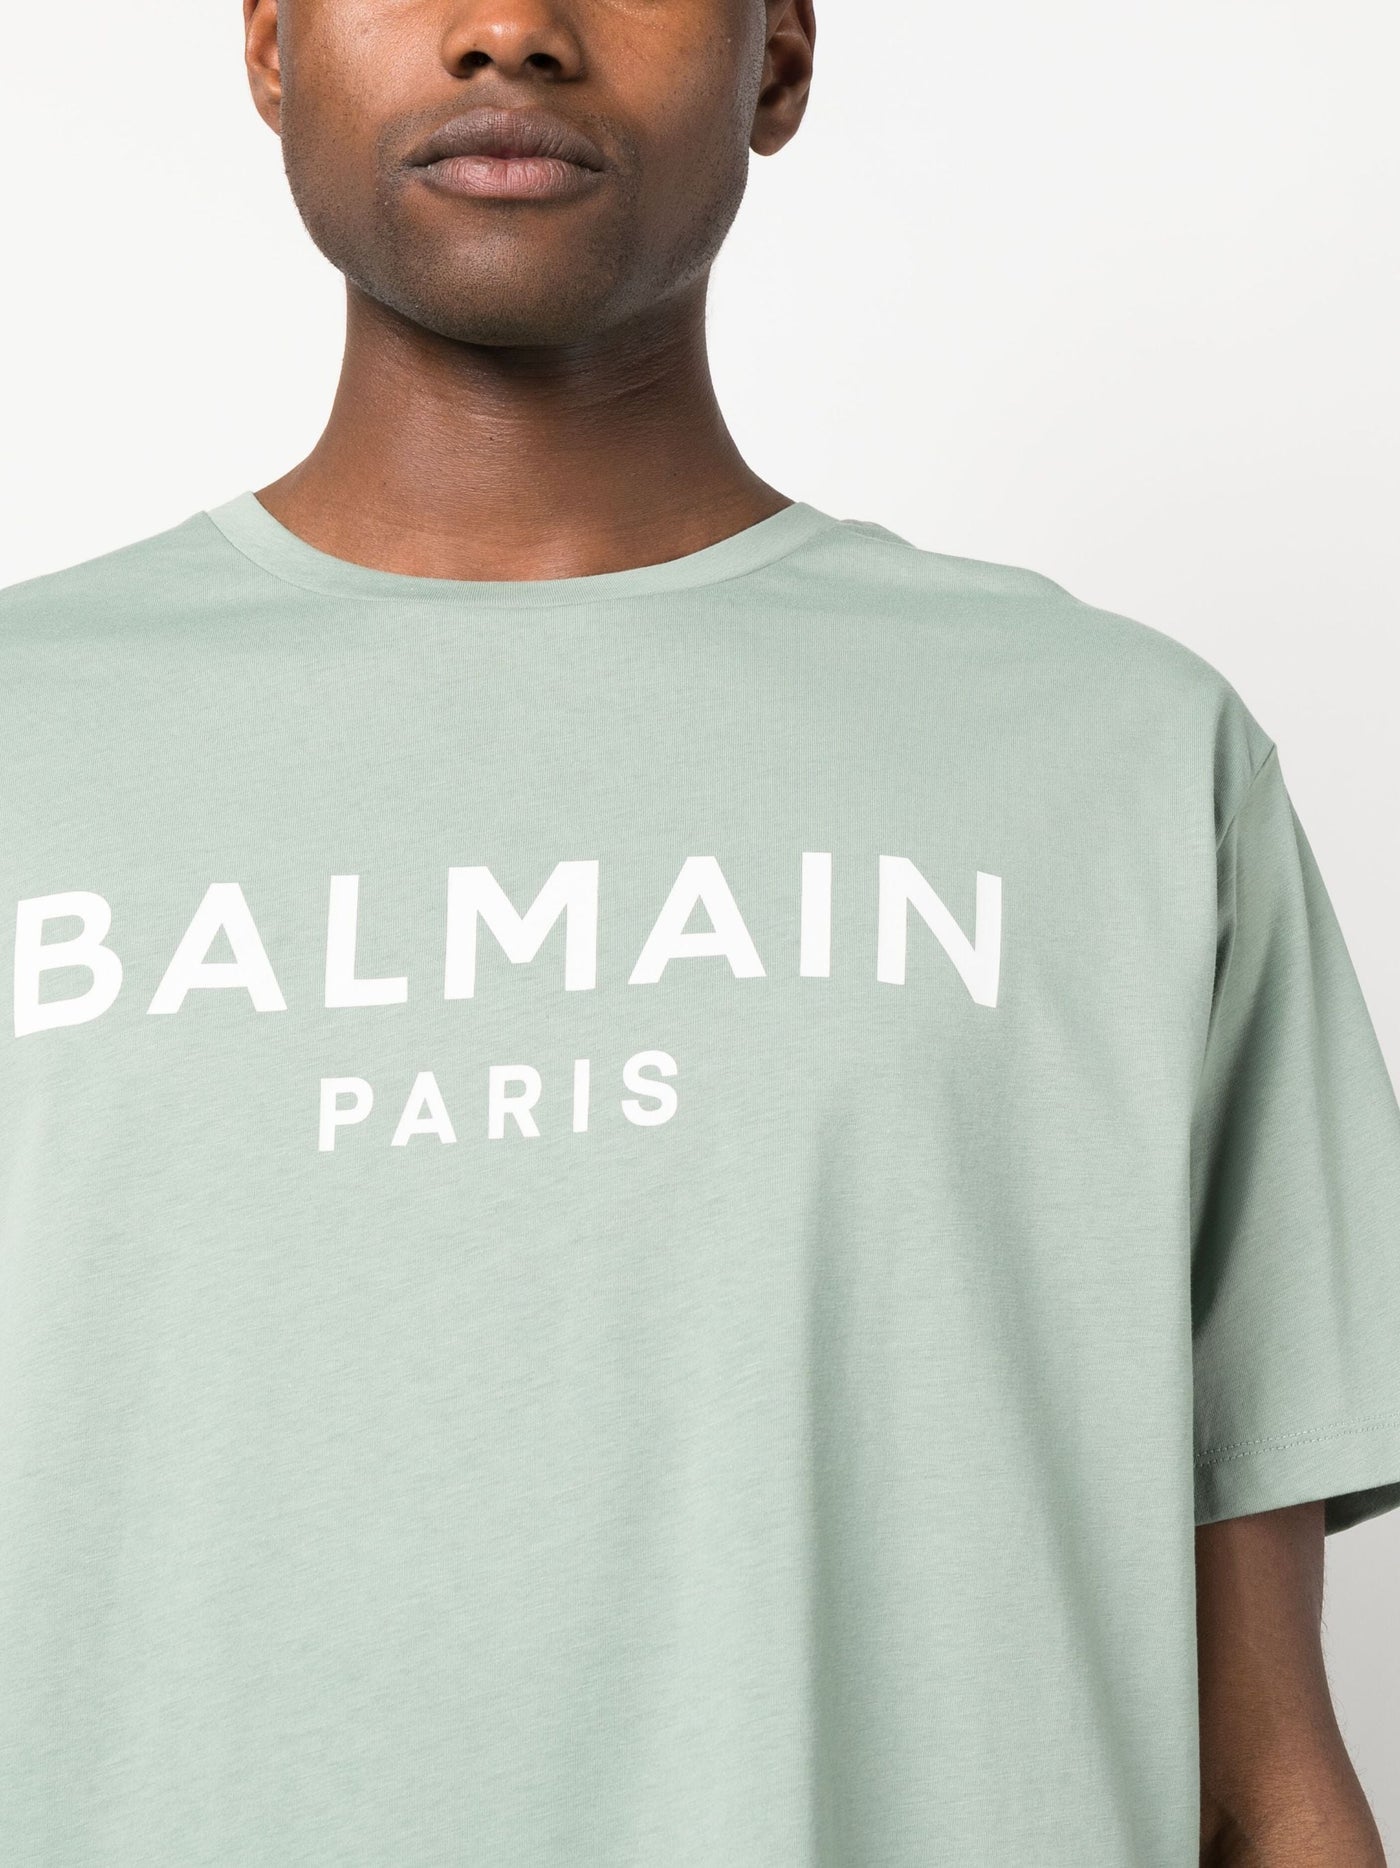 Balmain Paris Print Logo T-Shirt in Aqua Green